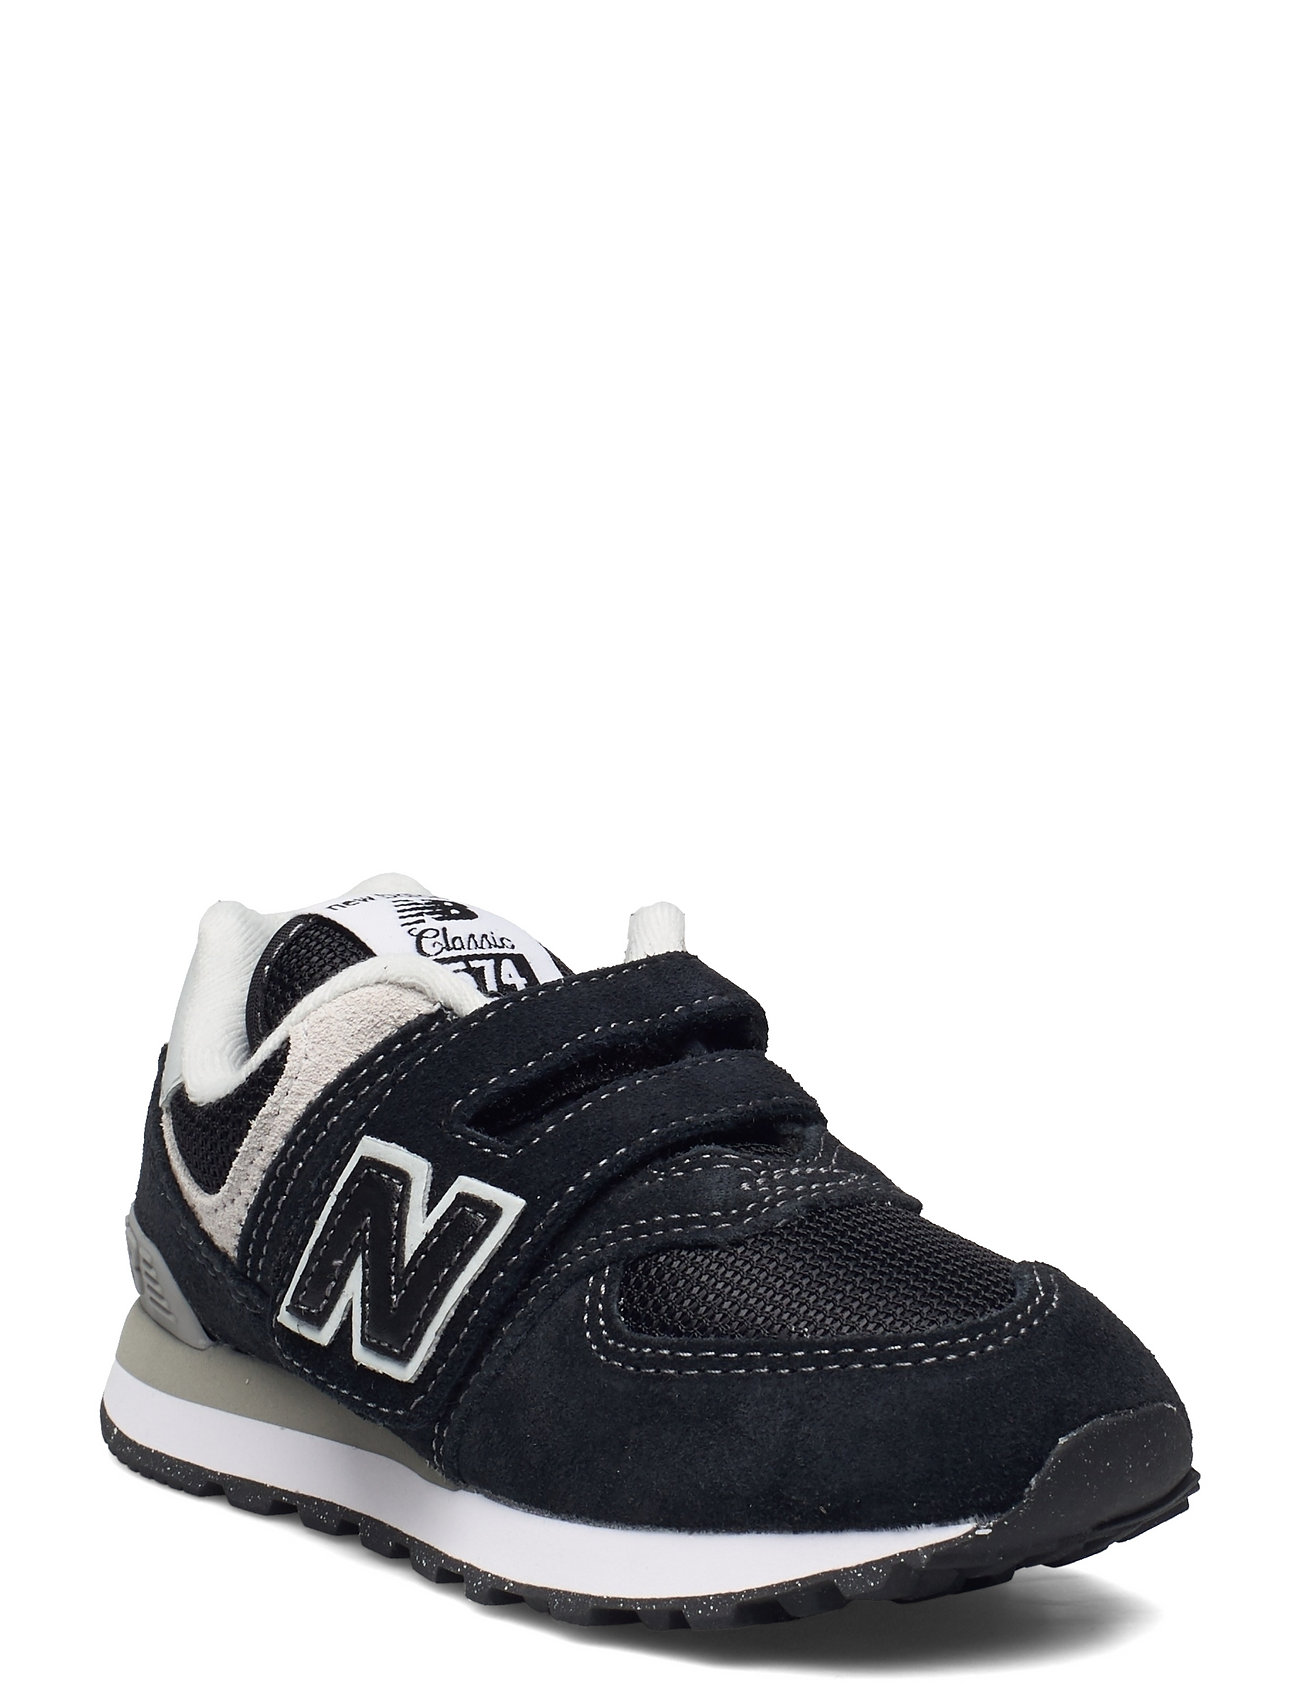 "New Balance" Balance 574 Kids Hook & Loop Sport Sneakers Low-top Black New